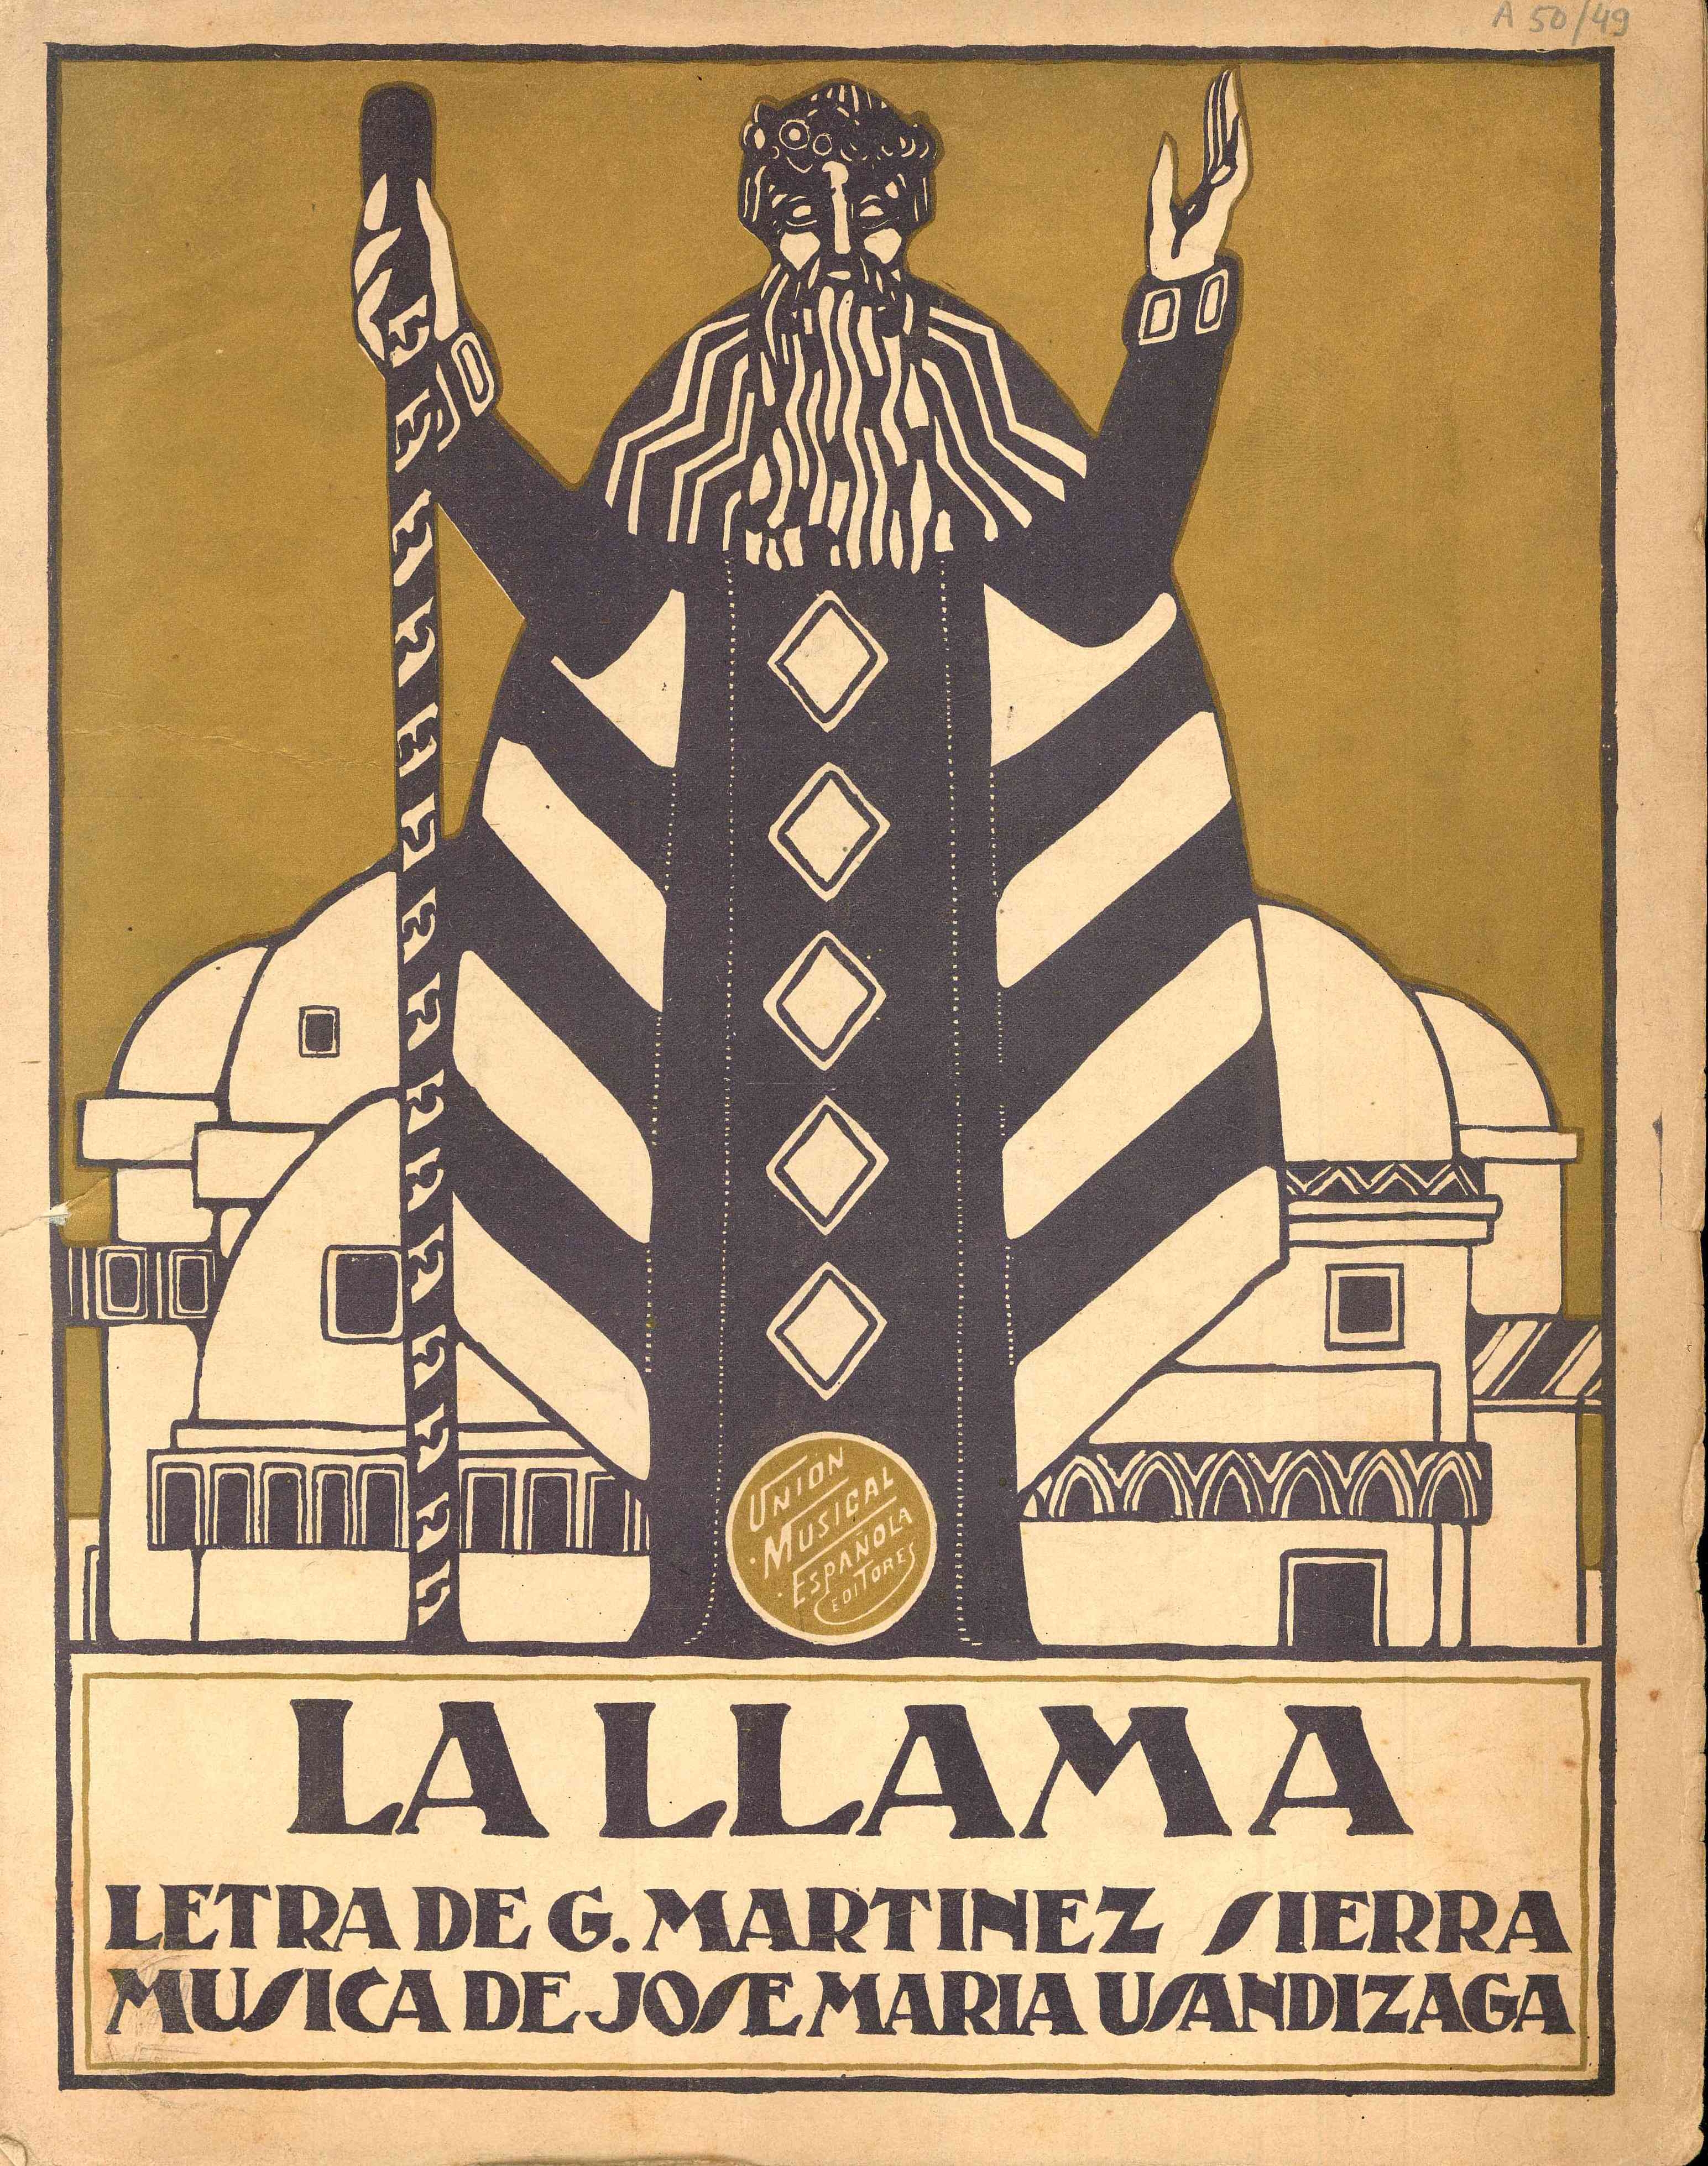 a Llama – opera of Jose Mª Udandizaga edited in 1918